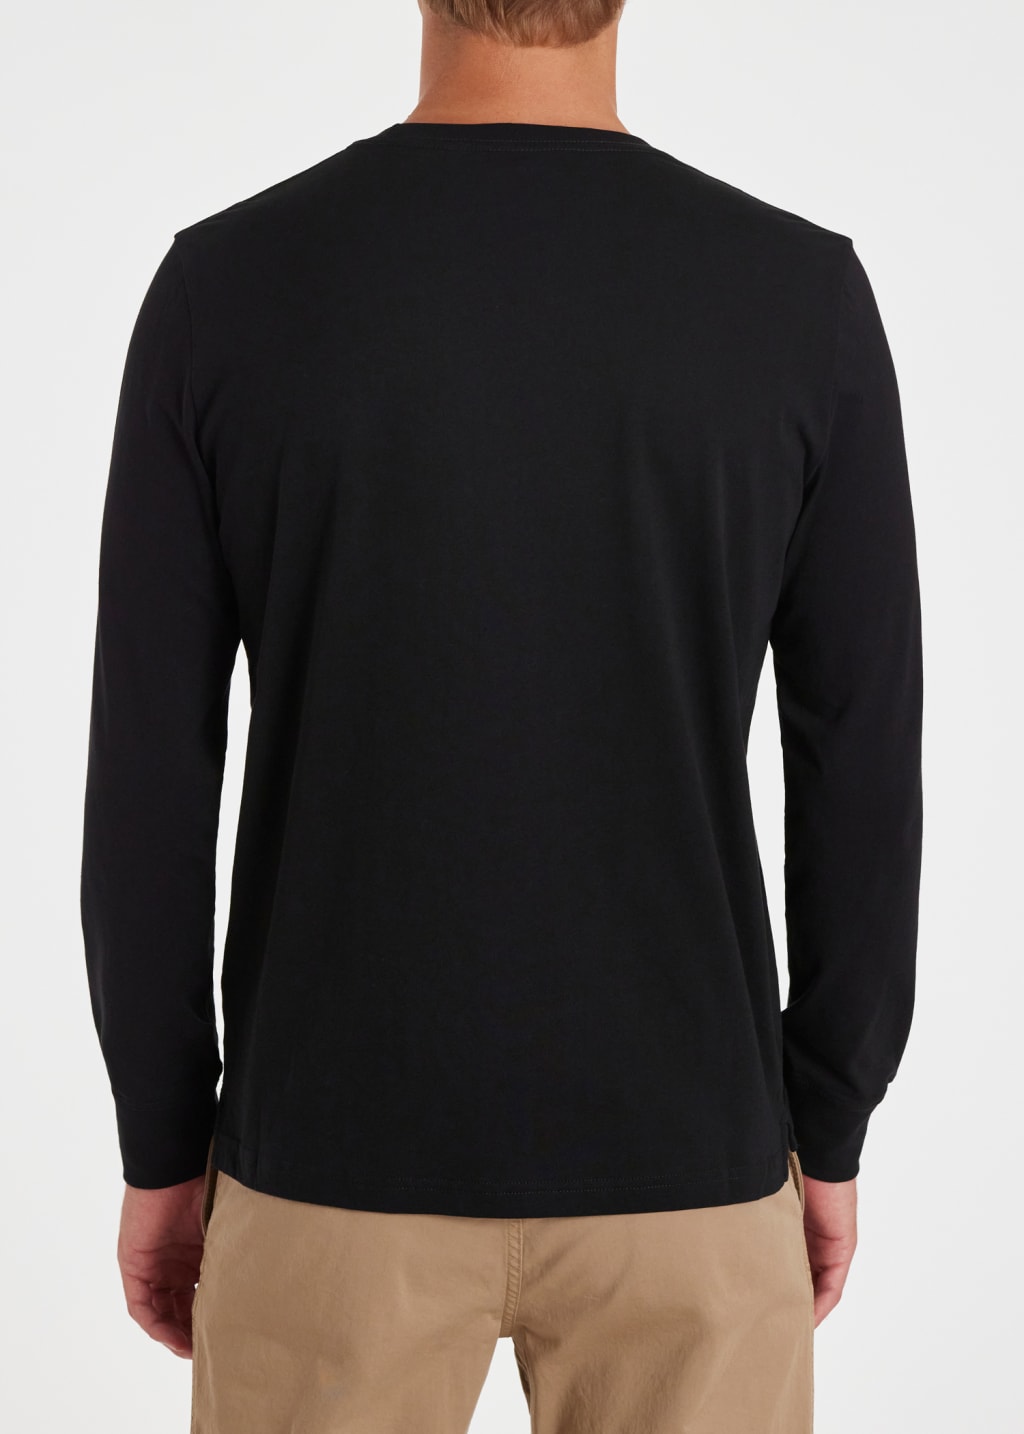 Back Model View - Black Zebra Logo Long-Sleeve T-Shirt Paul Smith